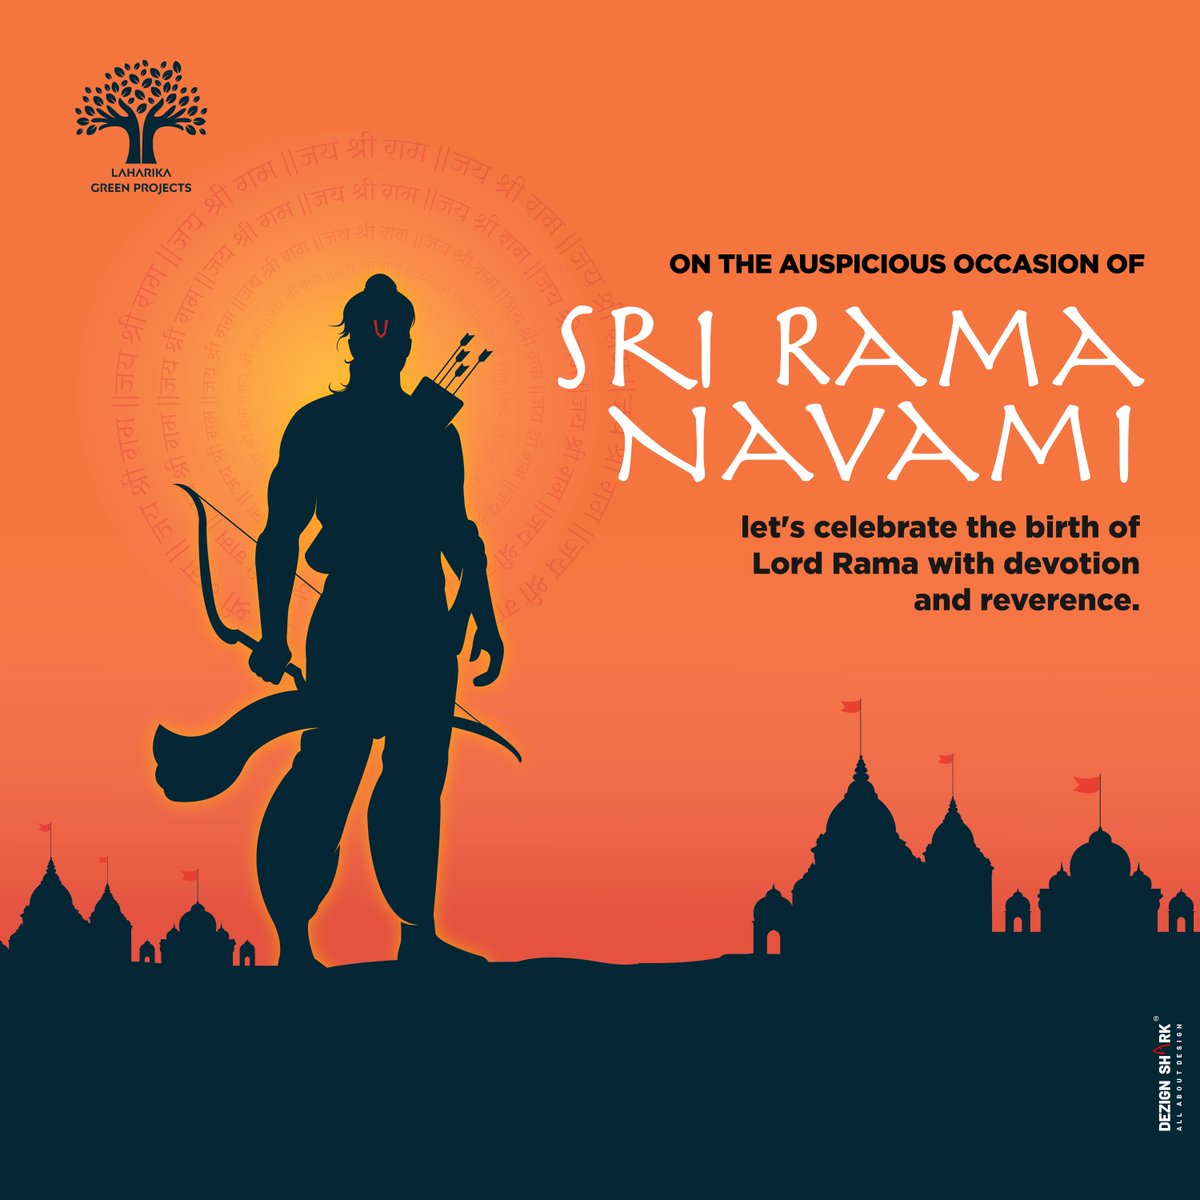 🌟 𝗪𝗮𝗿𝗺 𝘄𝗶𝘀𝗵𝗲𝘀 𝗼𝗻 𝗦𝗿𝗶𝗿𝗮𝗺𝗮𝗻𝗮𝘃𝗮𝗺𝗶 𝗳𝗿𝗼𝗺 𝗟𝗮𝗵𝗮𝗿𝗶𝗸𝗮 𝗚𝗿𝗲𝗲𝗻 𝗣𝗿𝗼𝗷𝗲𝗰𝘁𝘀! 🌟 
Let's cherish this sacred day with gratitude and joy. Happy Sri Ramanavami! 🙏🏽

#SriRamaNavami #festivevibes #natureexist #laharikaproject